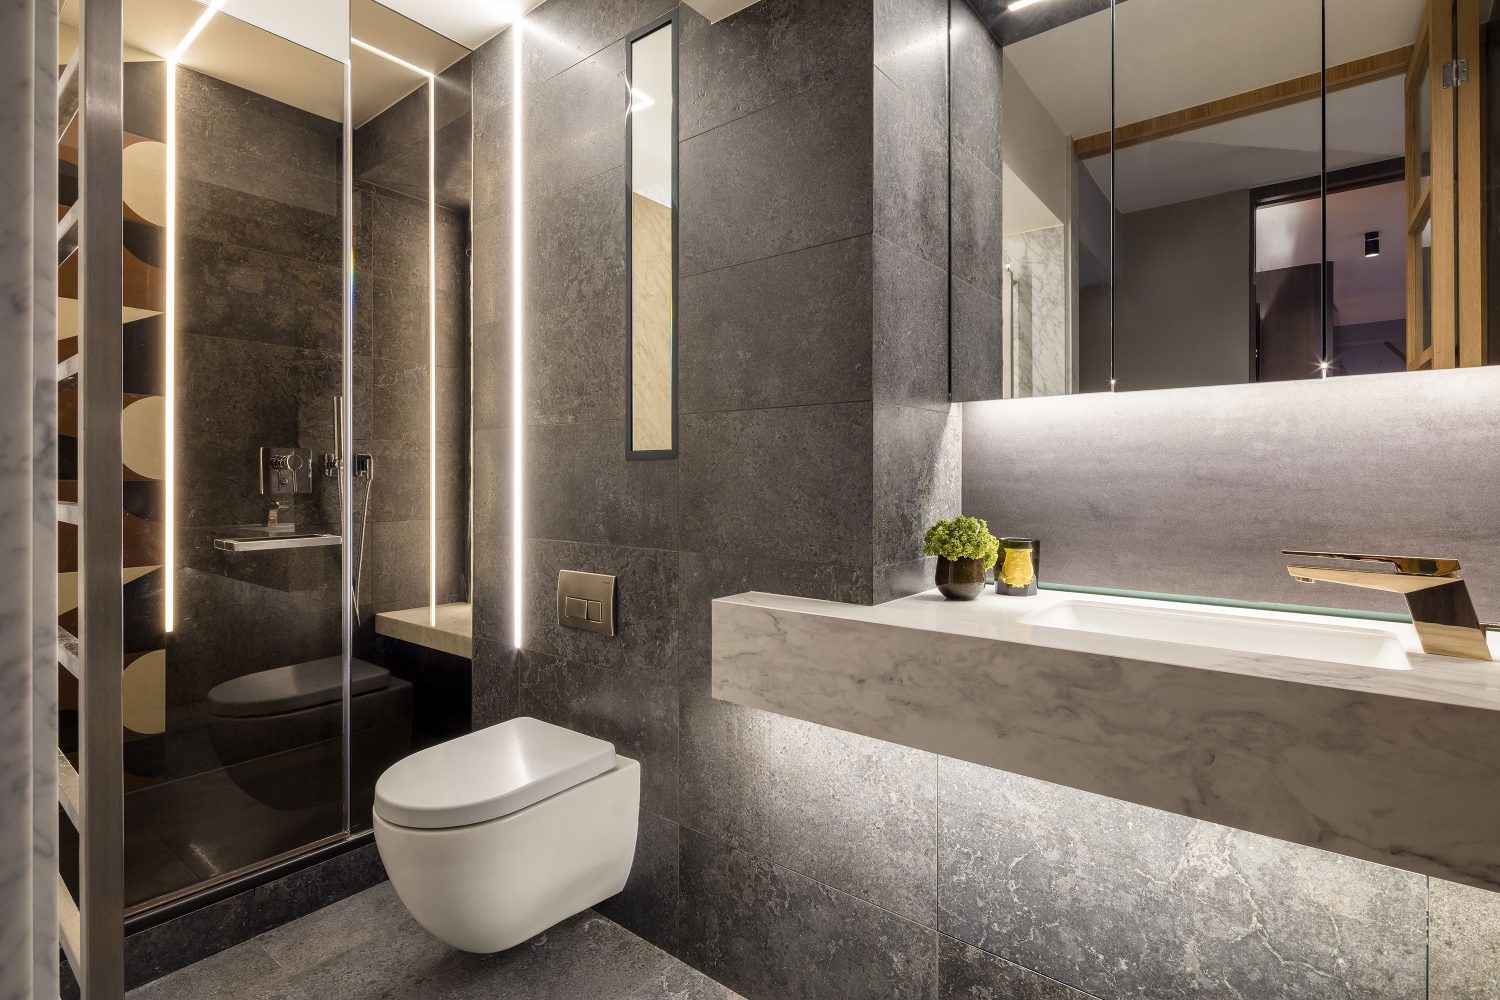 Bathroom - Daniel Hopwood home design - interior design London